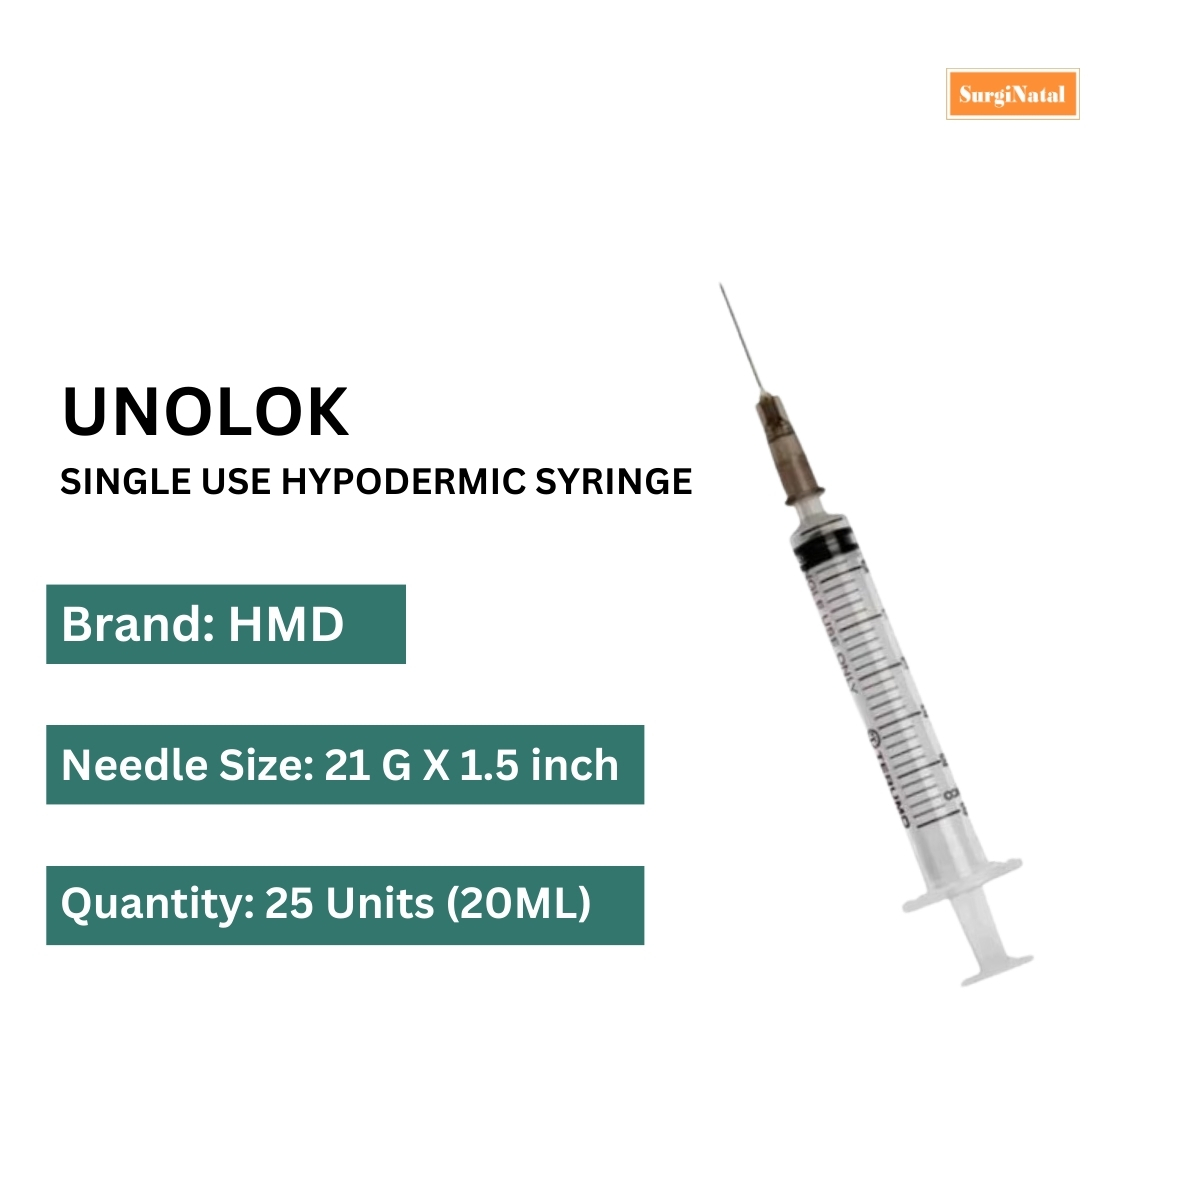 unolok syringe 20ml 21g*1.5 inch - 25 units pack